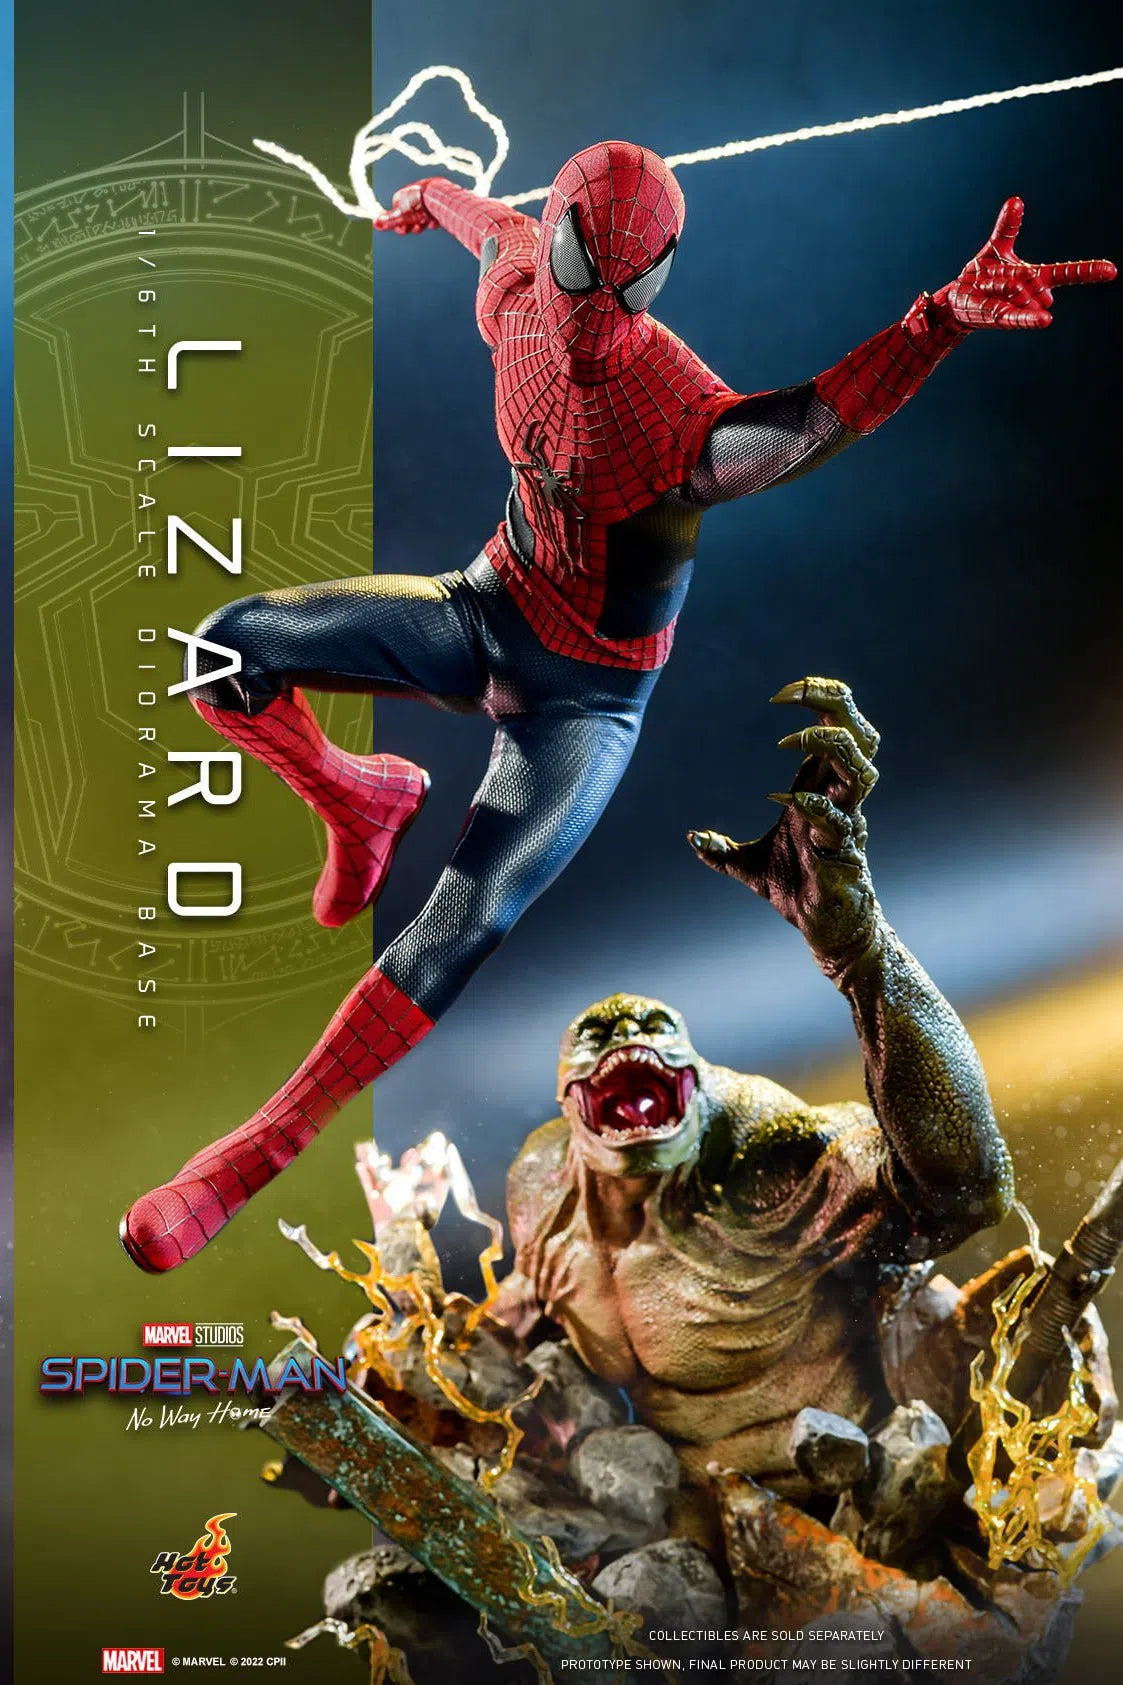 Spider-Man: With Lizard: The Amazing Spider-Man 2